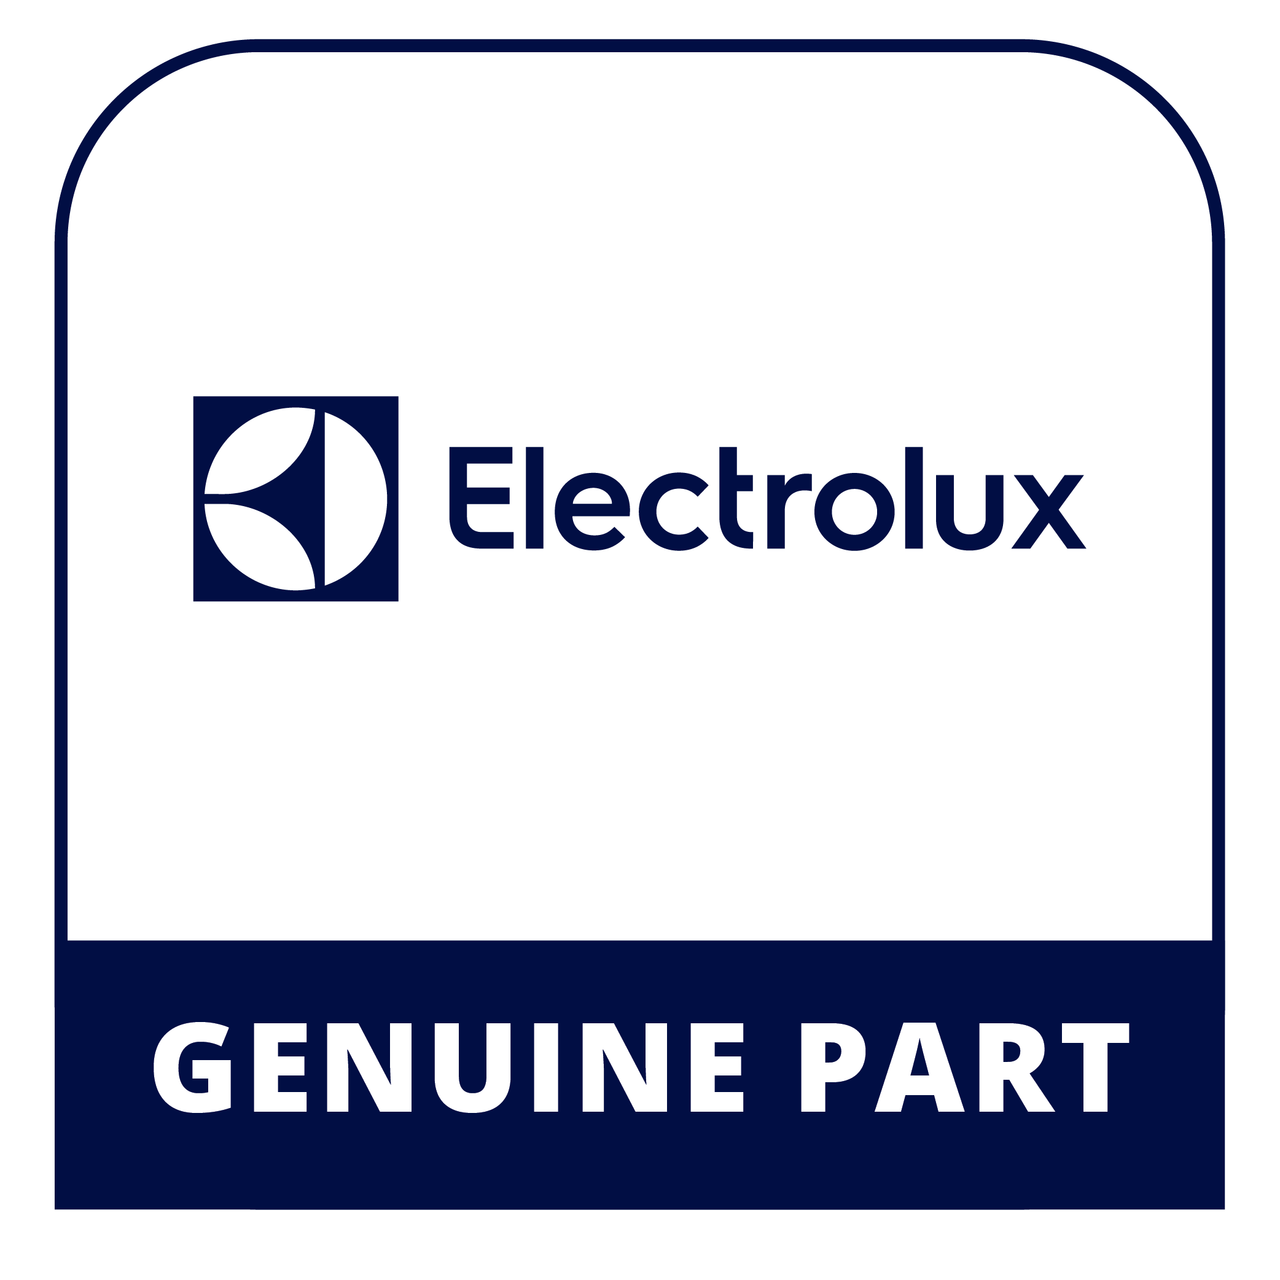 Frigidaire - Electrolux 5304495632 Cover - Genuine Electrolux Part